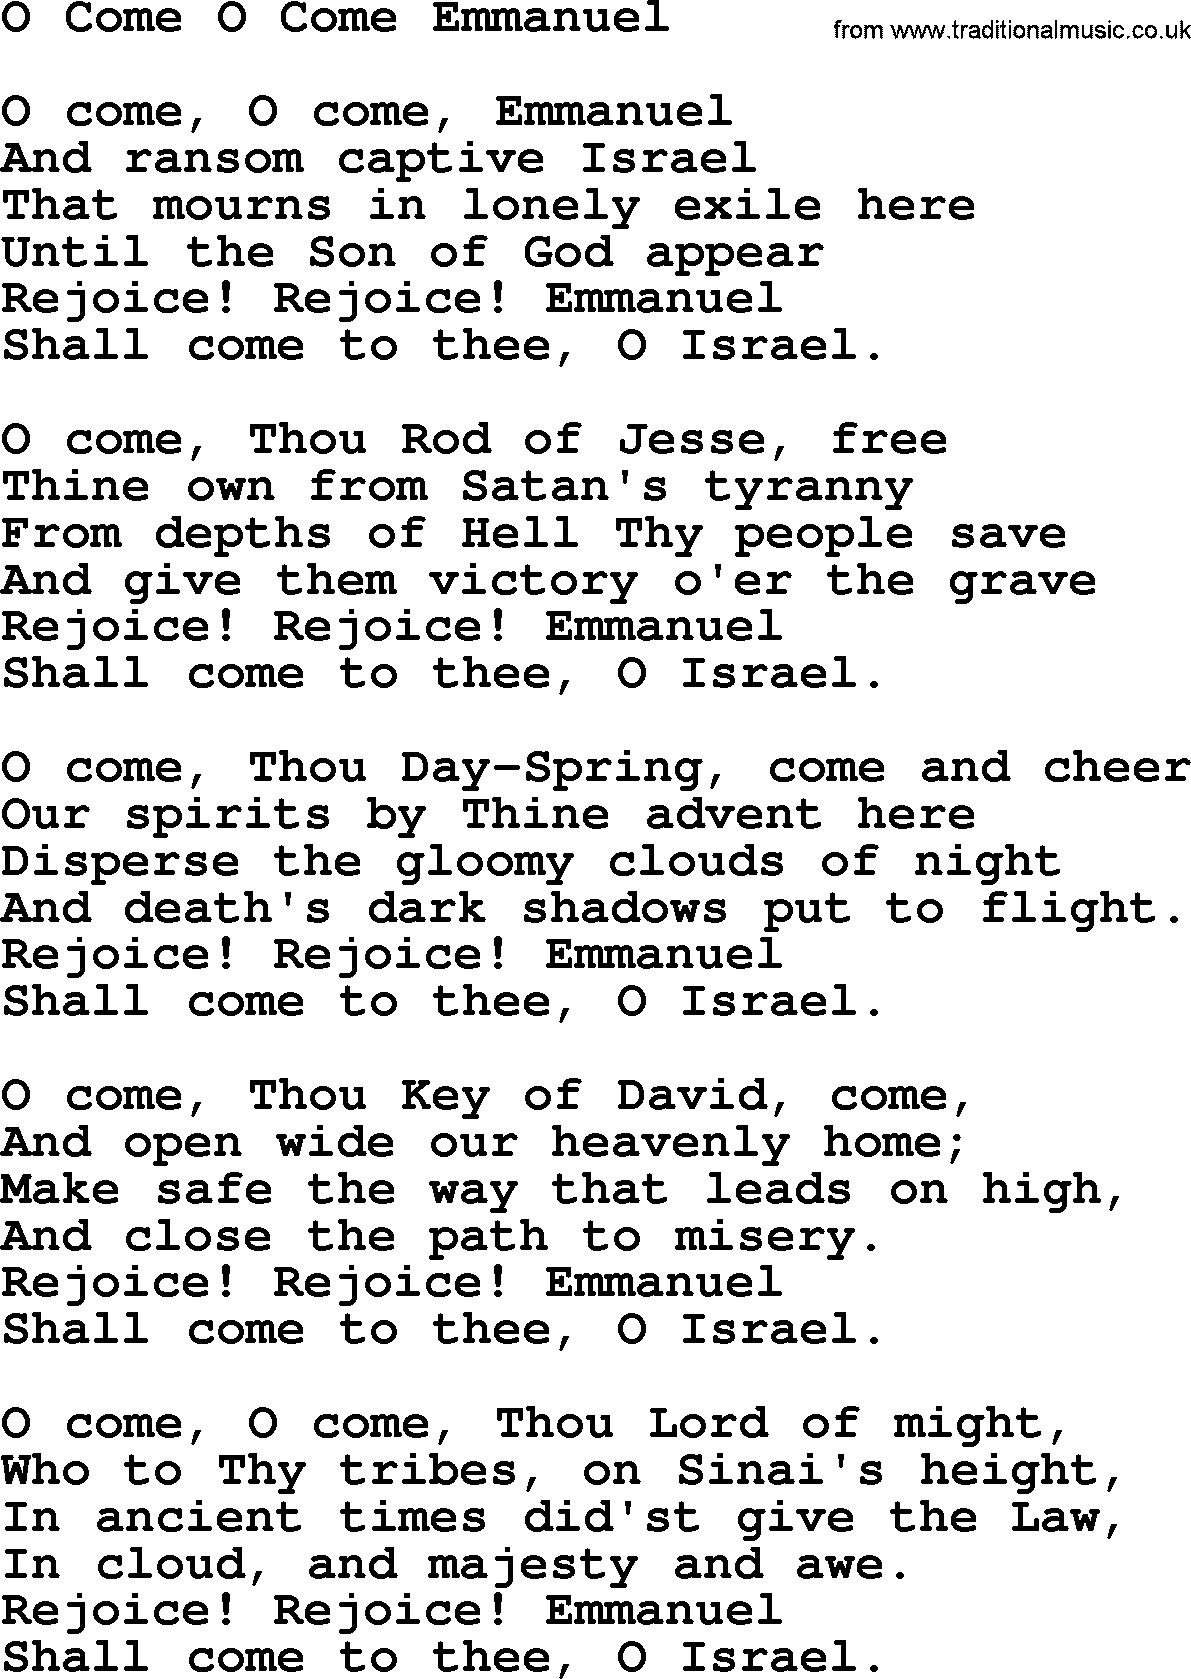 Christmas Hymns, Carols and Songs, title: O Come O Come Emmanuel, lyrics with PDF